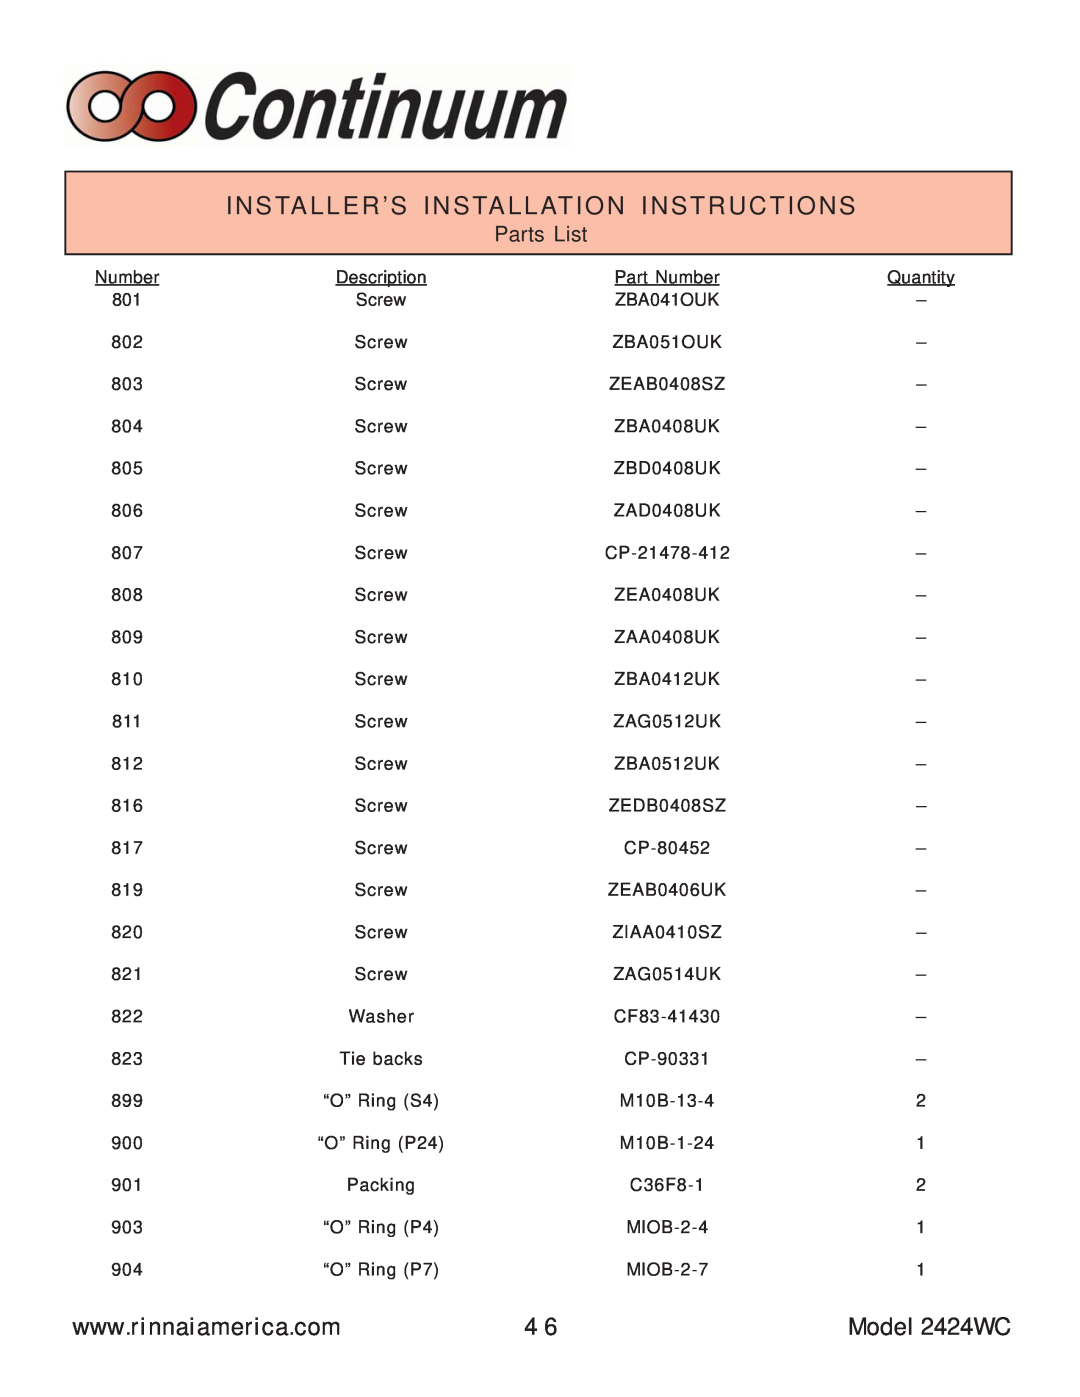 Rinnai manual Model 2424WC, Parts List 